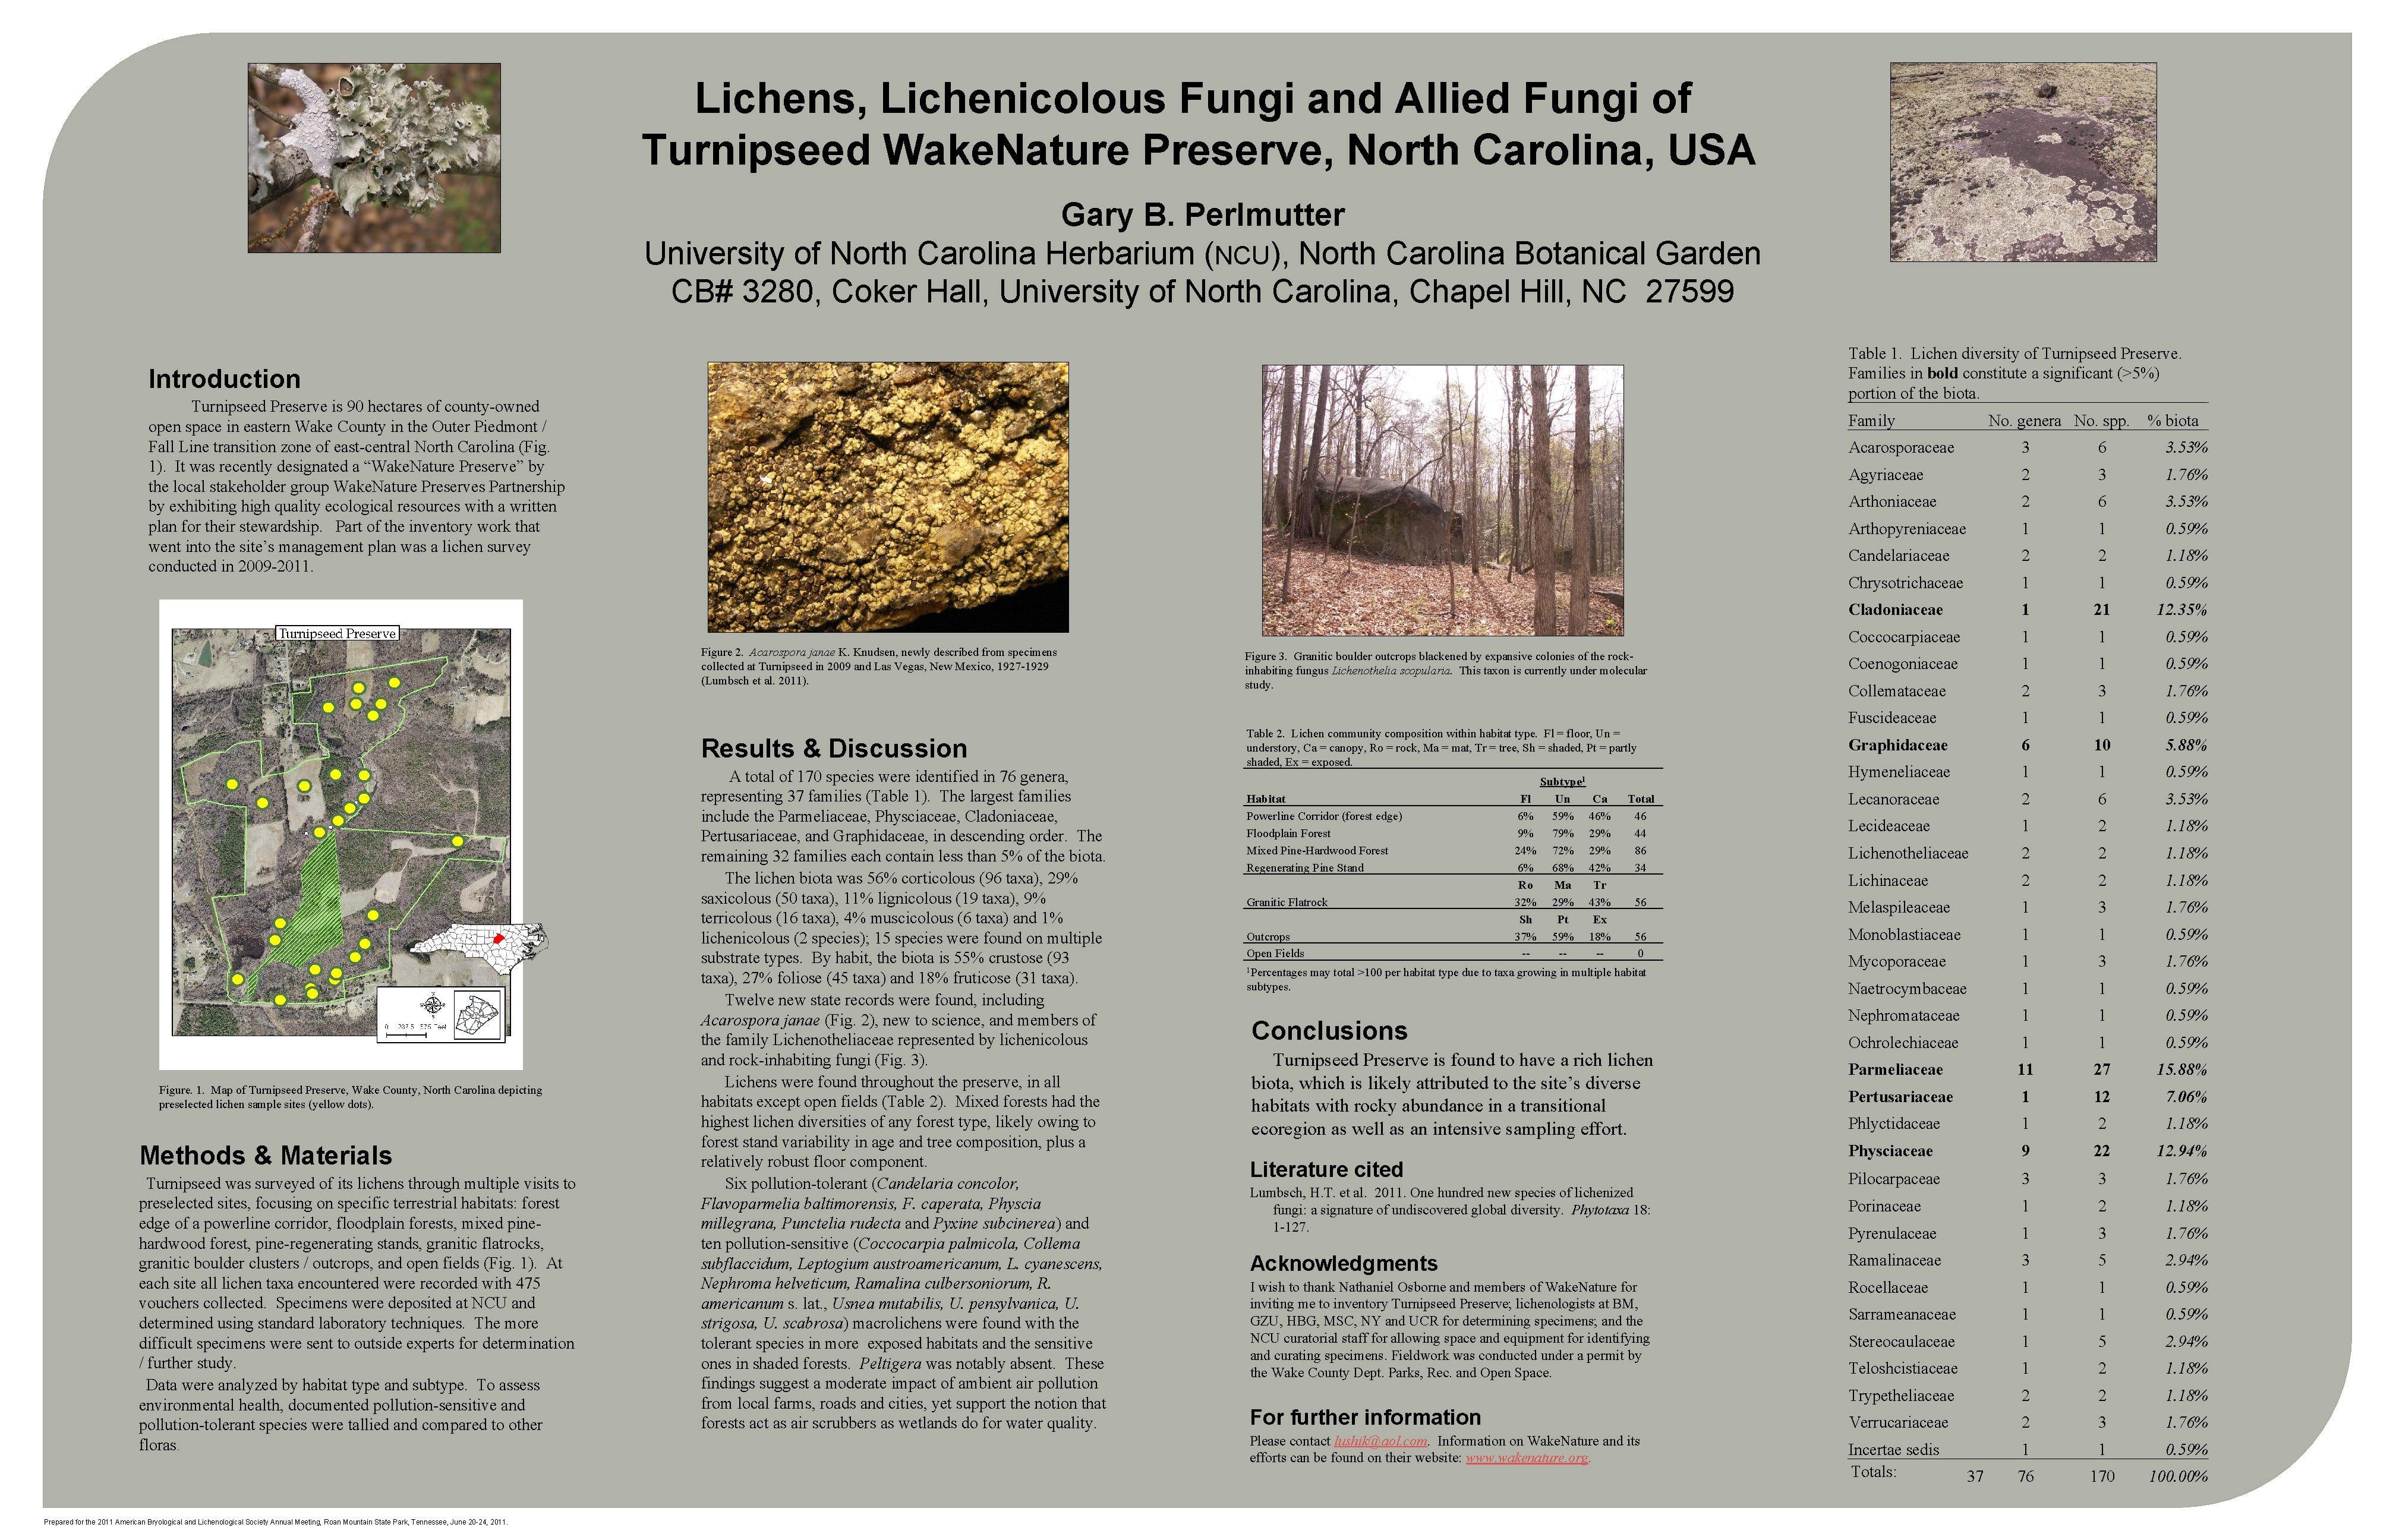 Lichens, Lichenicolous Fungi and Allied Fungi of Turnipseed Wake. Nature Preserve, North Carolina, USA